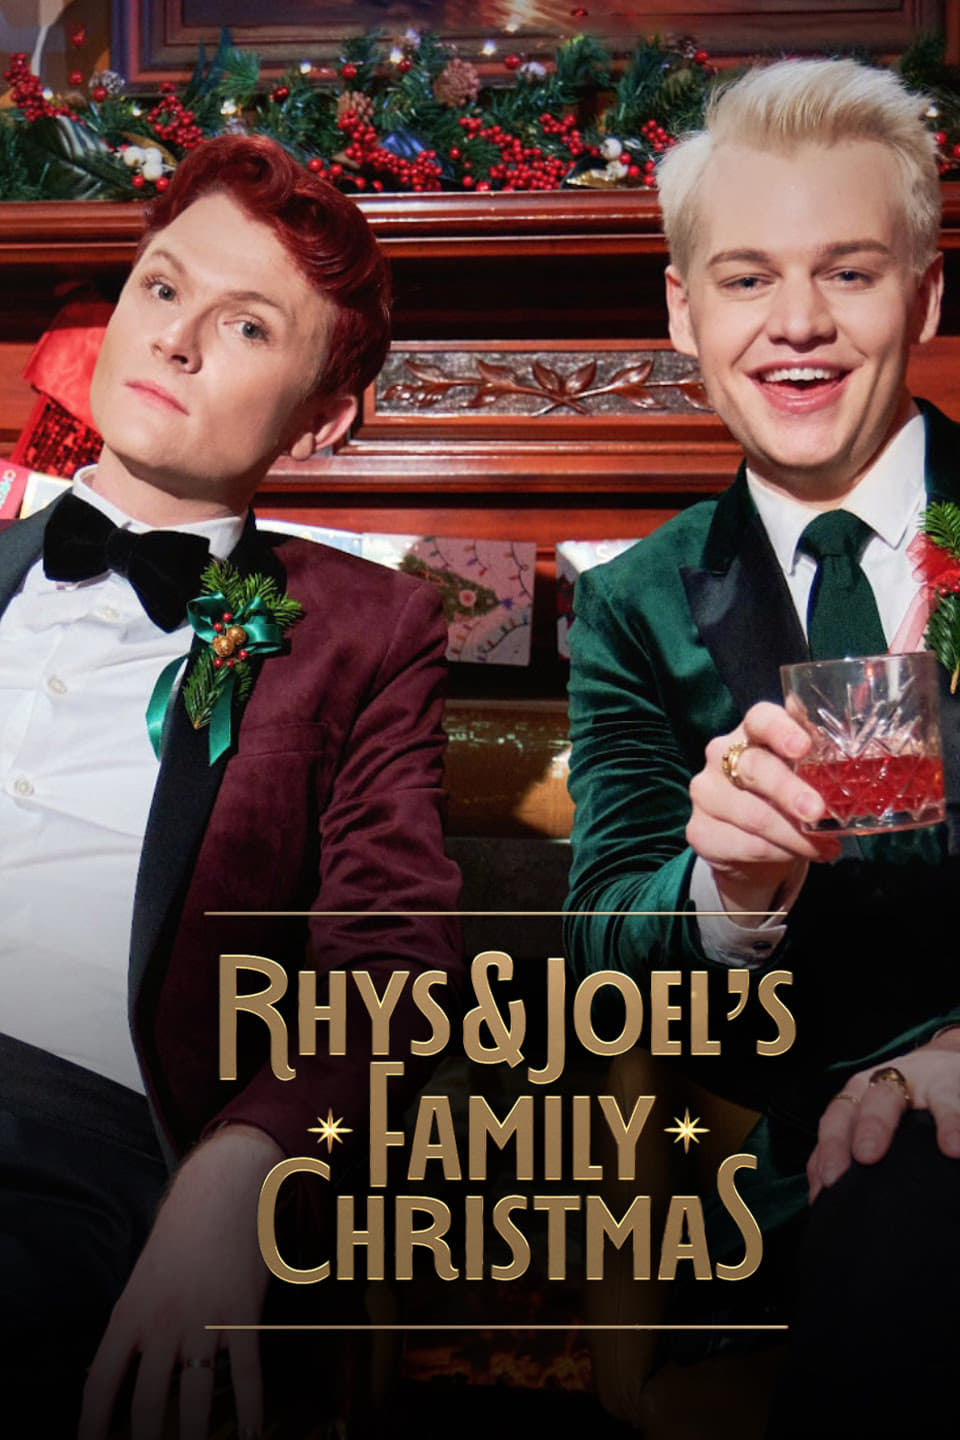 Rhys & Joel’s Family Christmas